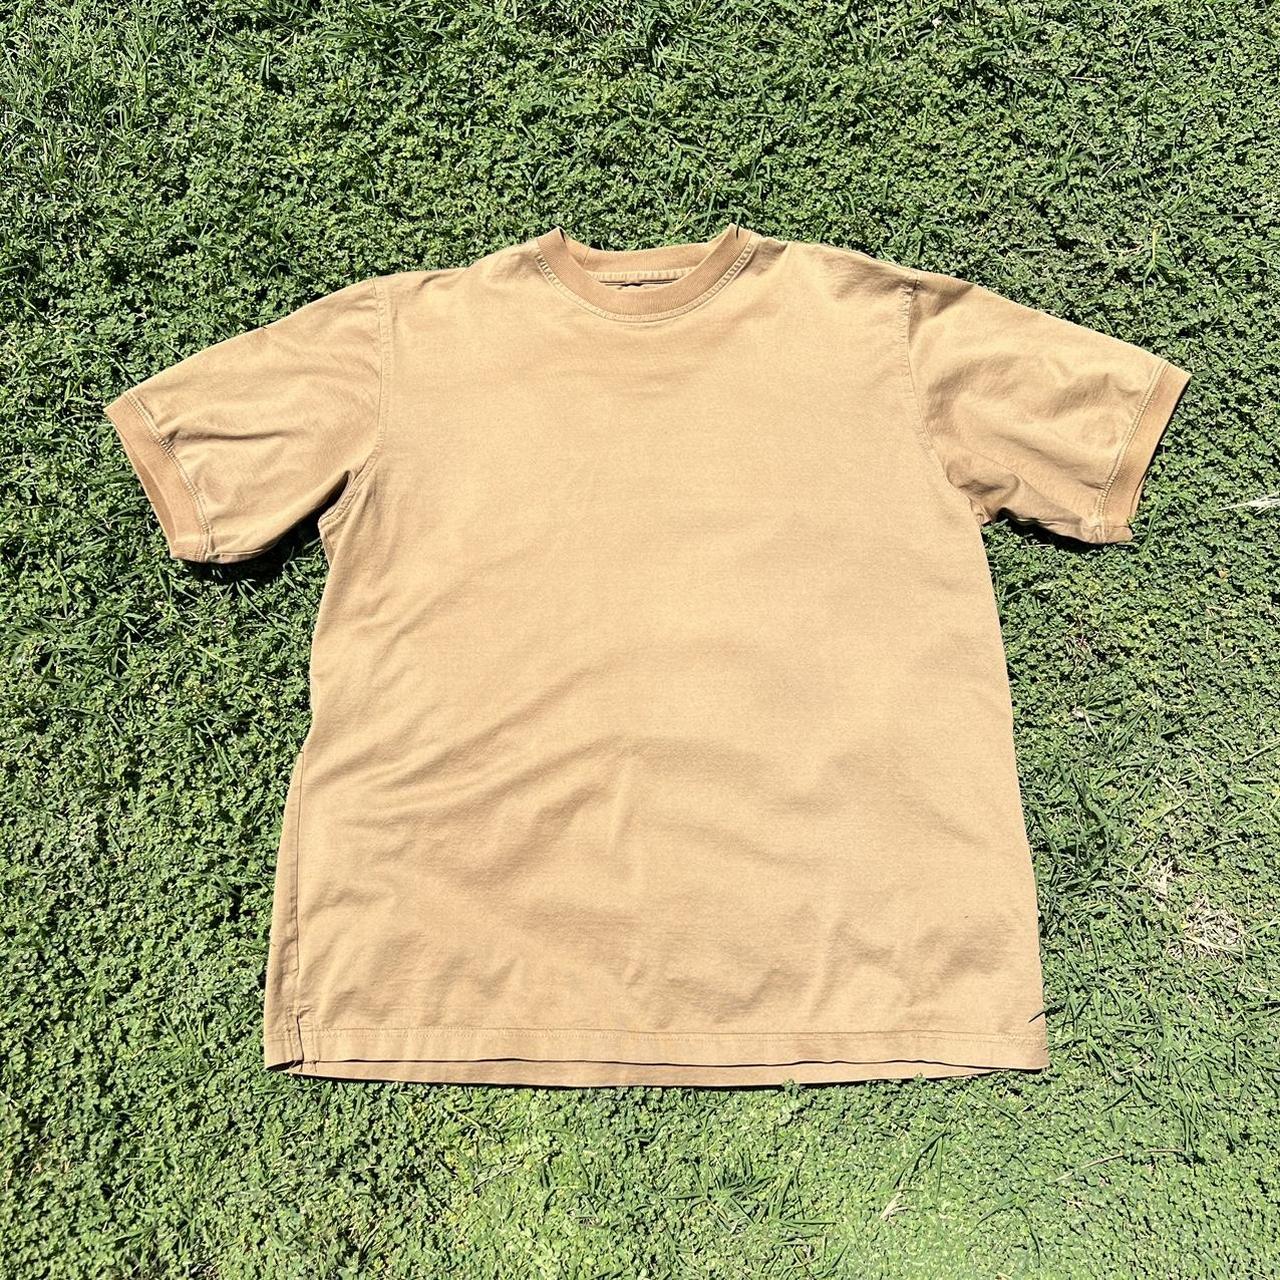 Mens vintage 90s medium gold tan brown tee shirt top... - Depop